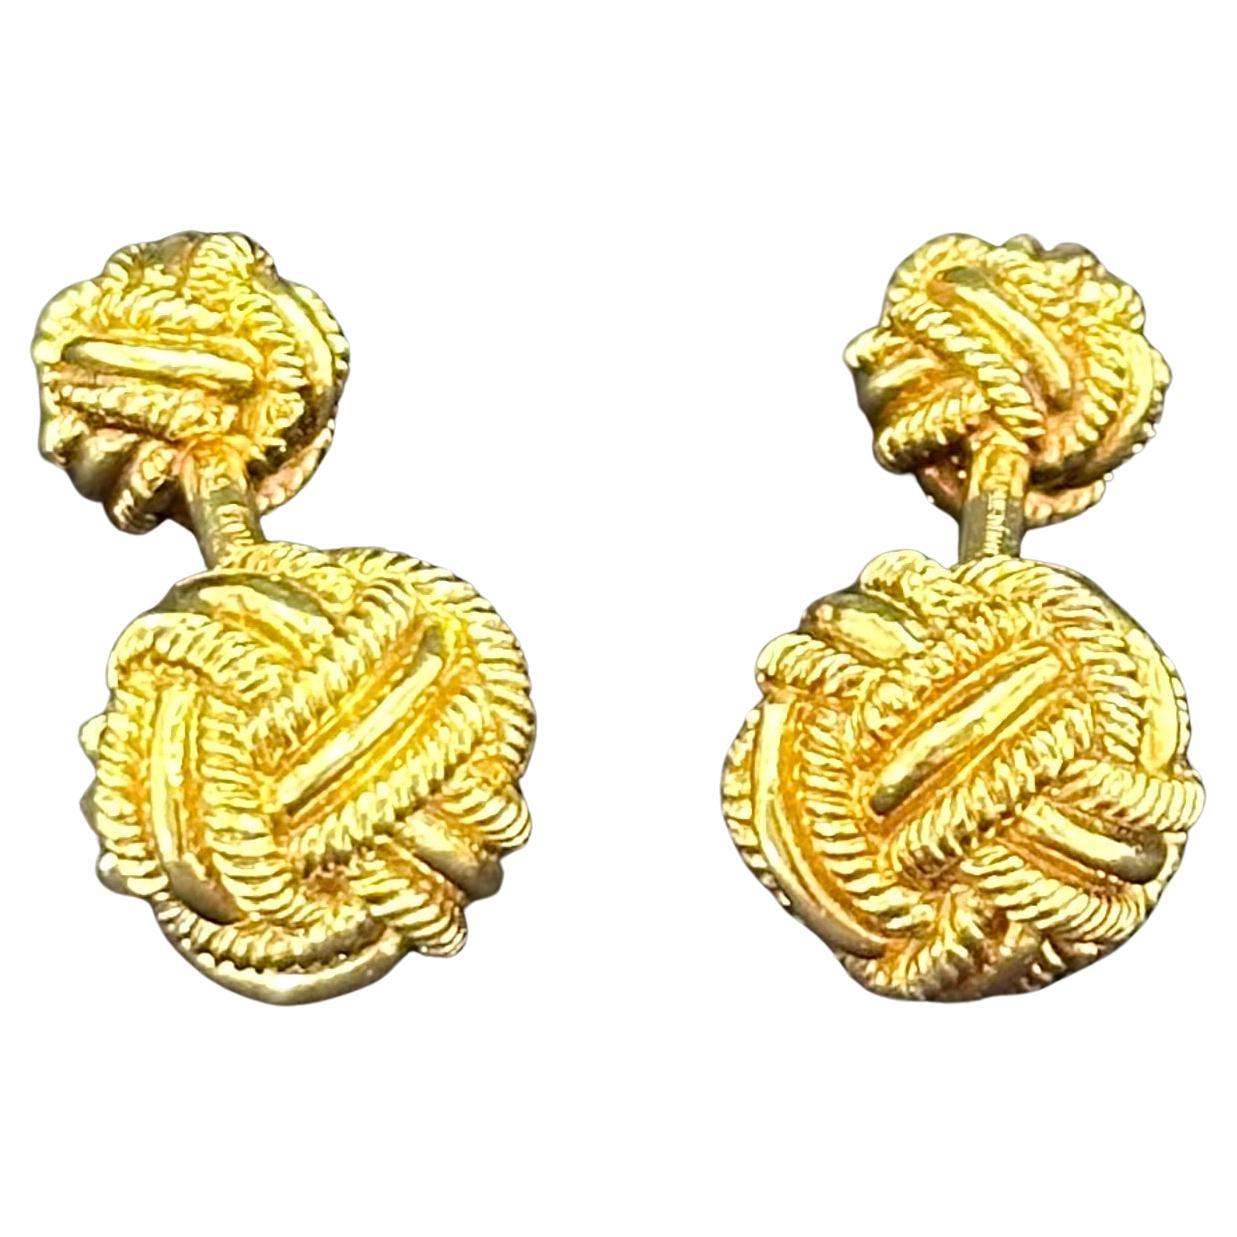 Tiffany & Co Schlumberge 18k Yellow Gold Woven Knot Cufflinks 